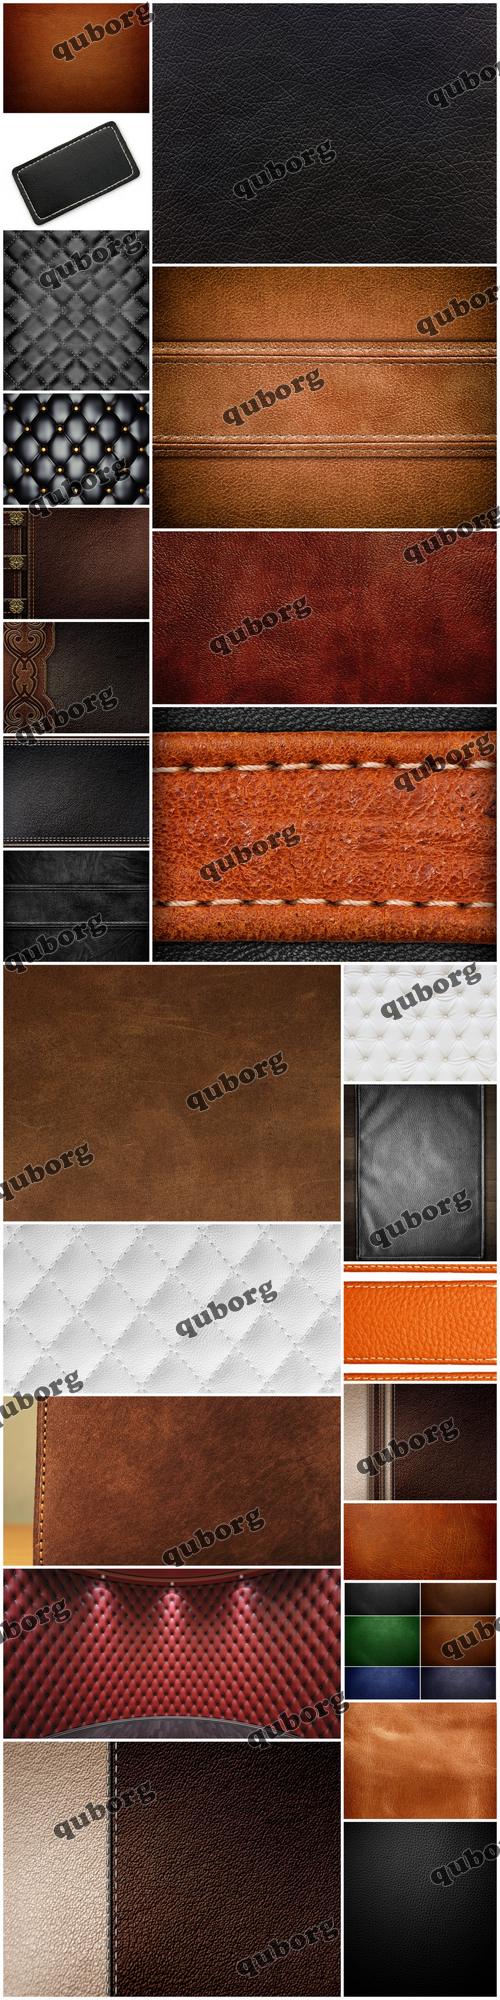 Stock Photos - Leather Textures